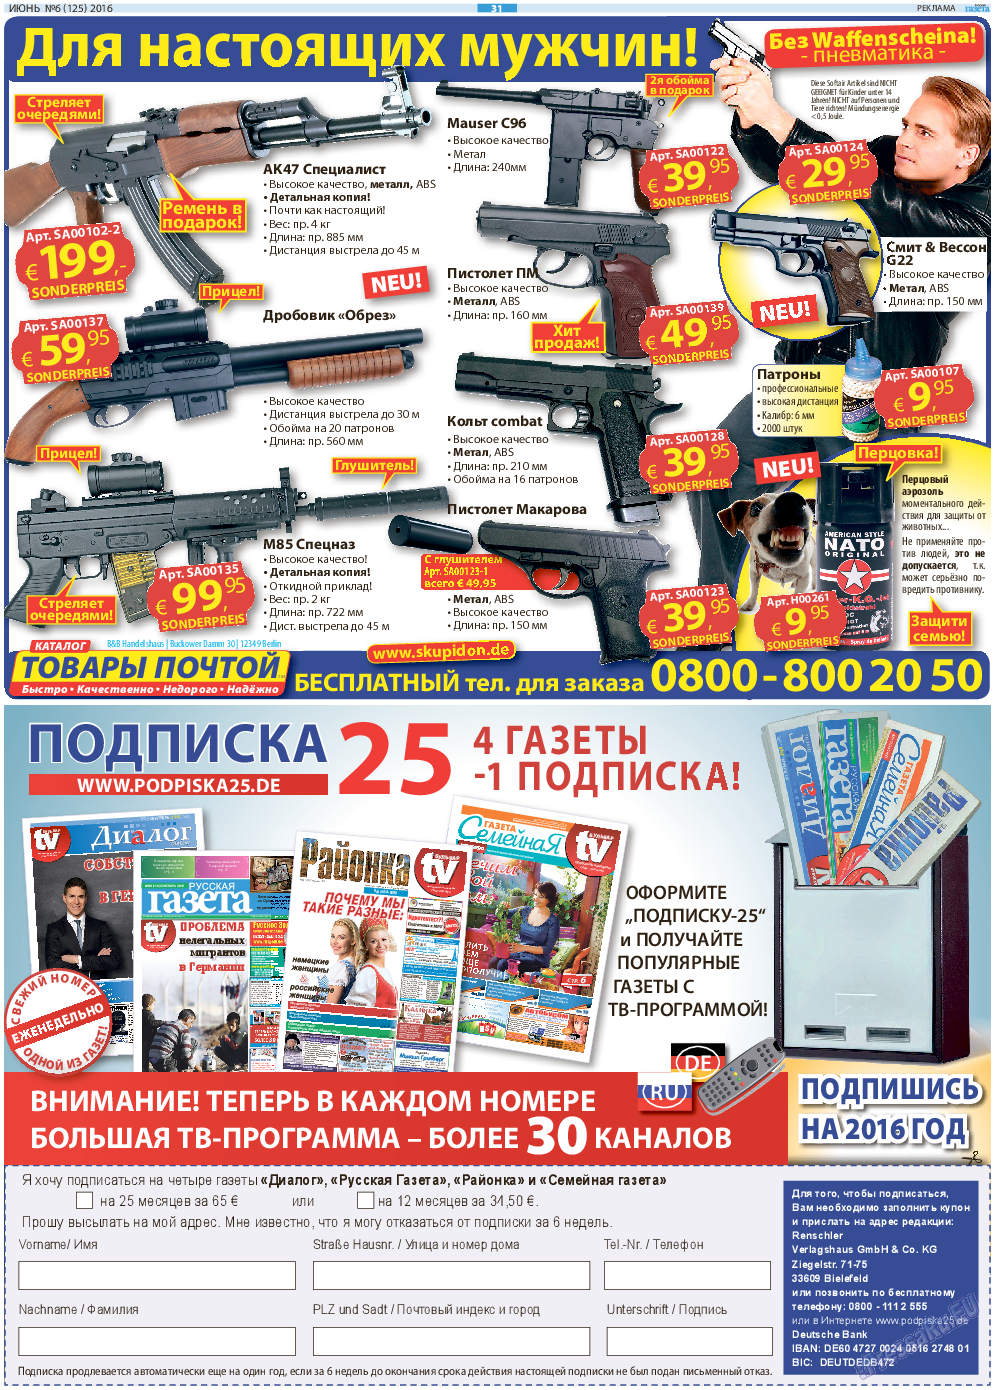 Русская Газета, газета. 2016 №6 стр.31